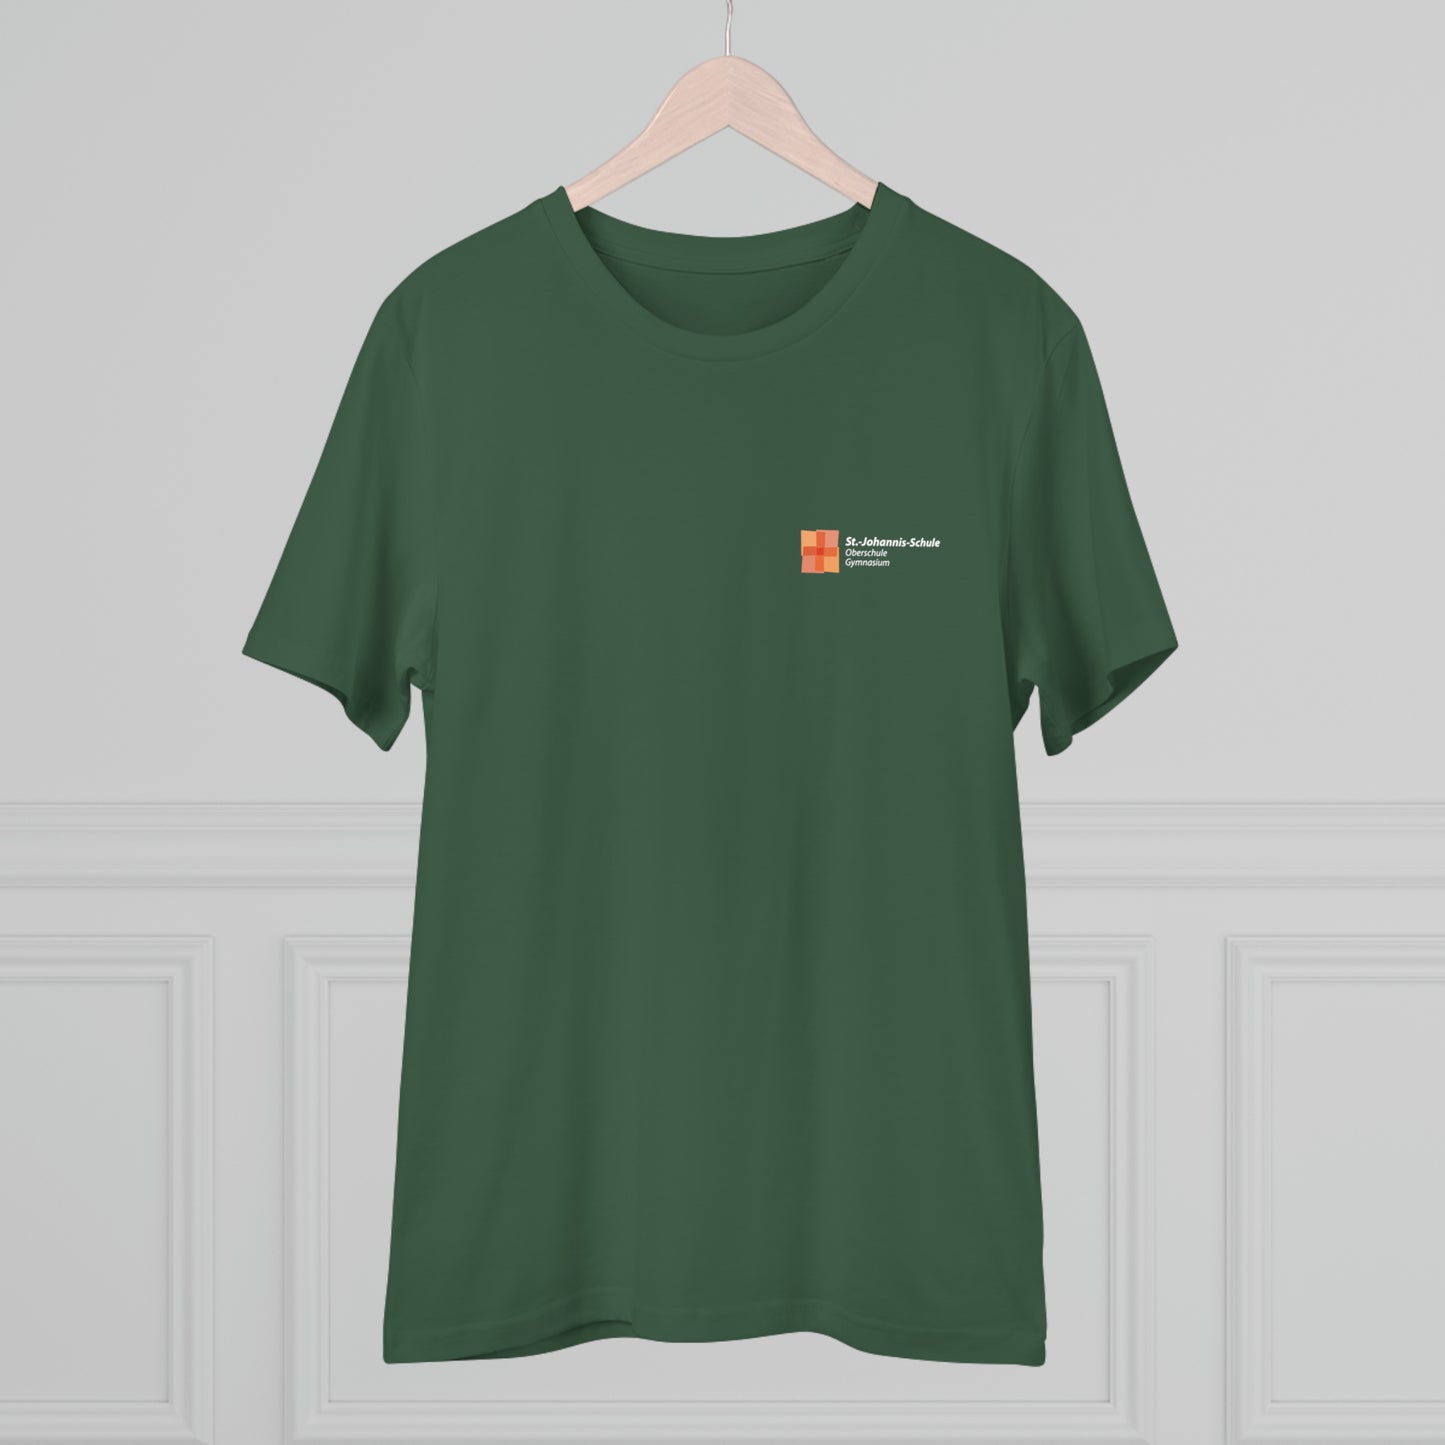 St.-Johannis-Schule Organic T-Shirt